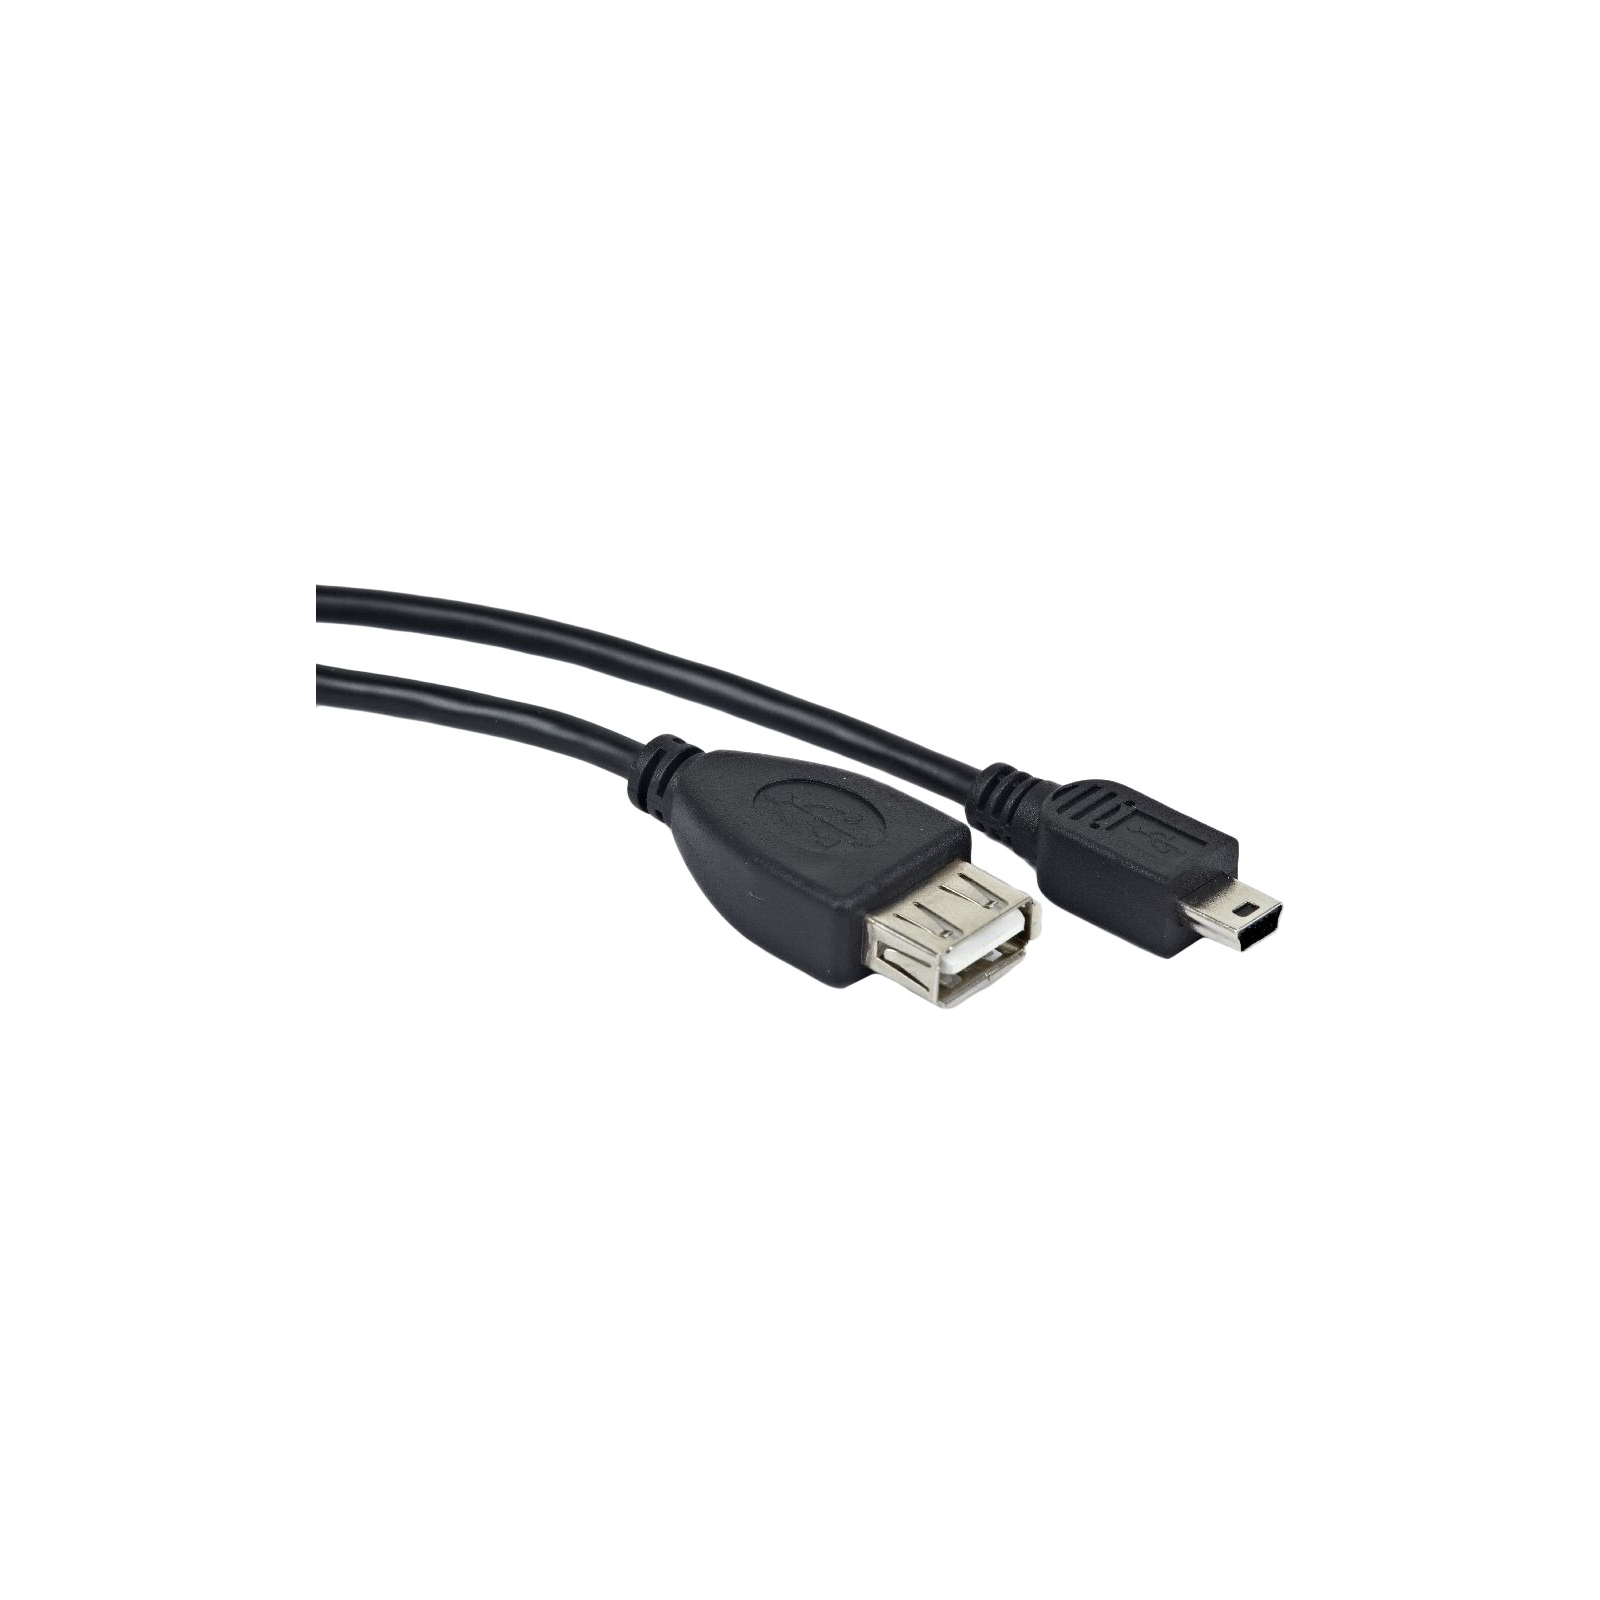 Дата кабель OTG USB 2.0 AF to Mini 5P 0.15m Maxxtro (U-AF5P-OTG) зображення 3